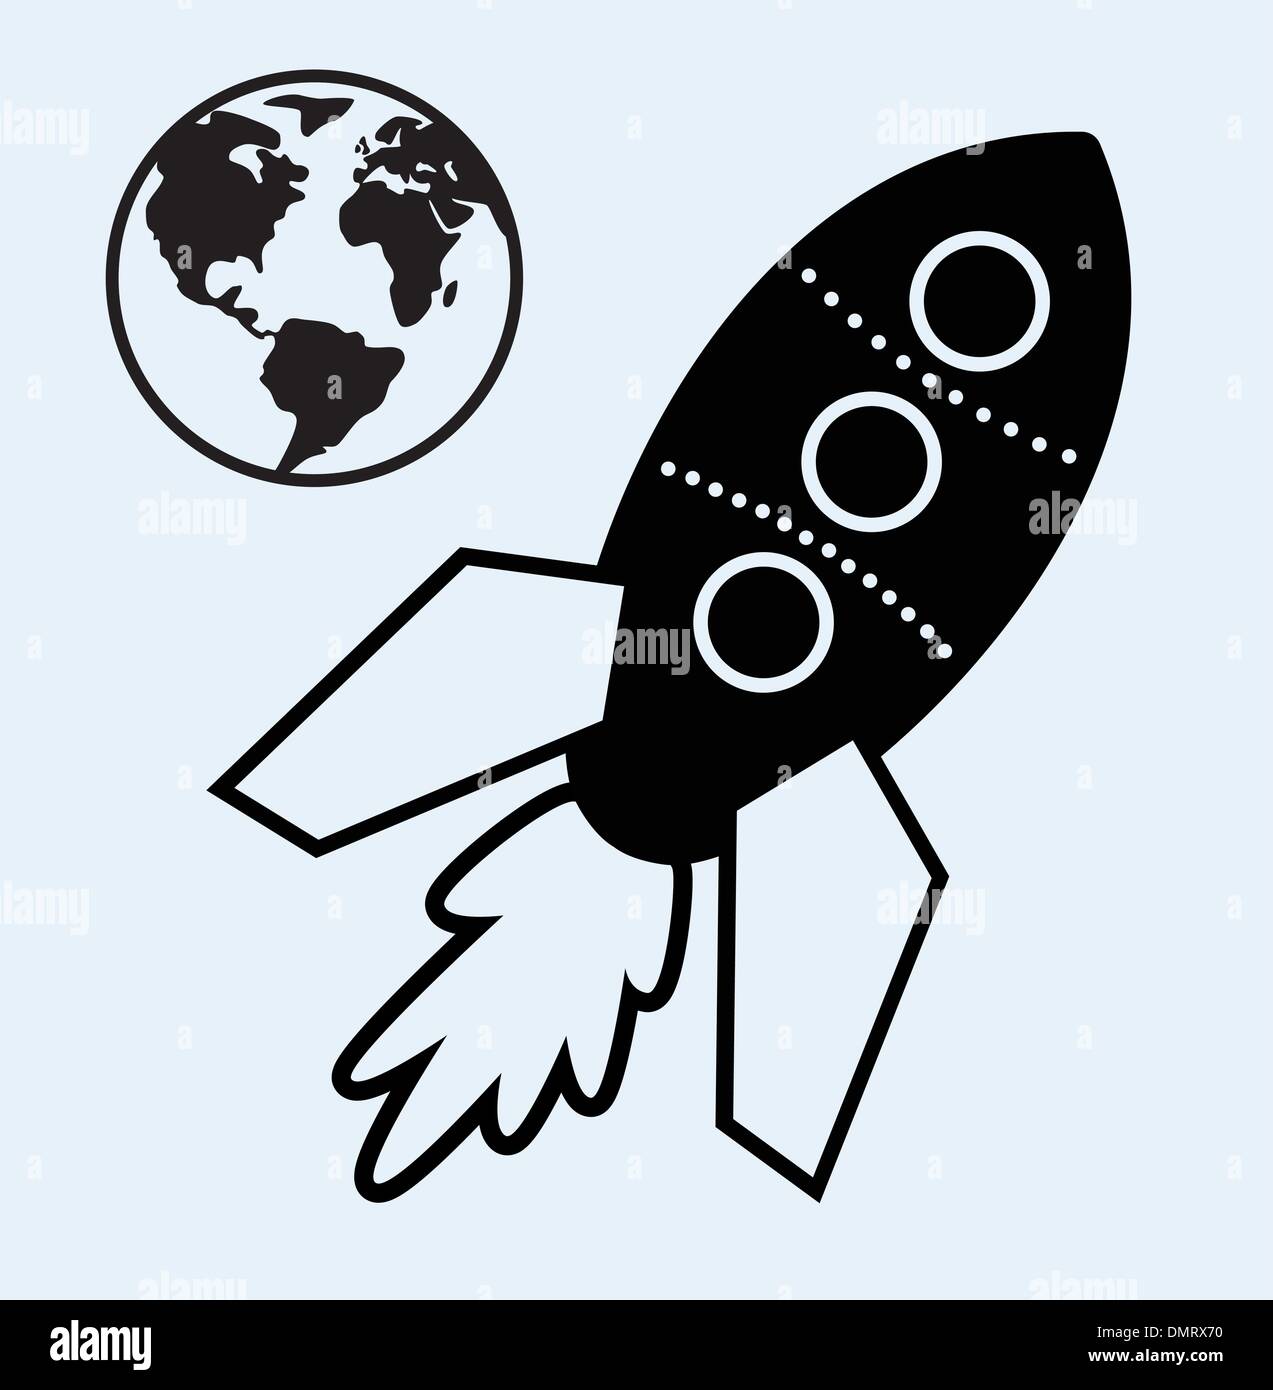 Rakete und Planet Erde-Symbole Stock Vektor